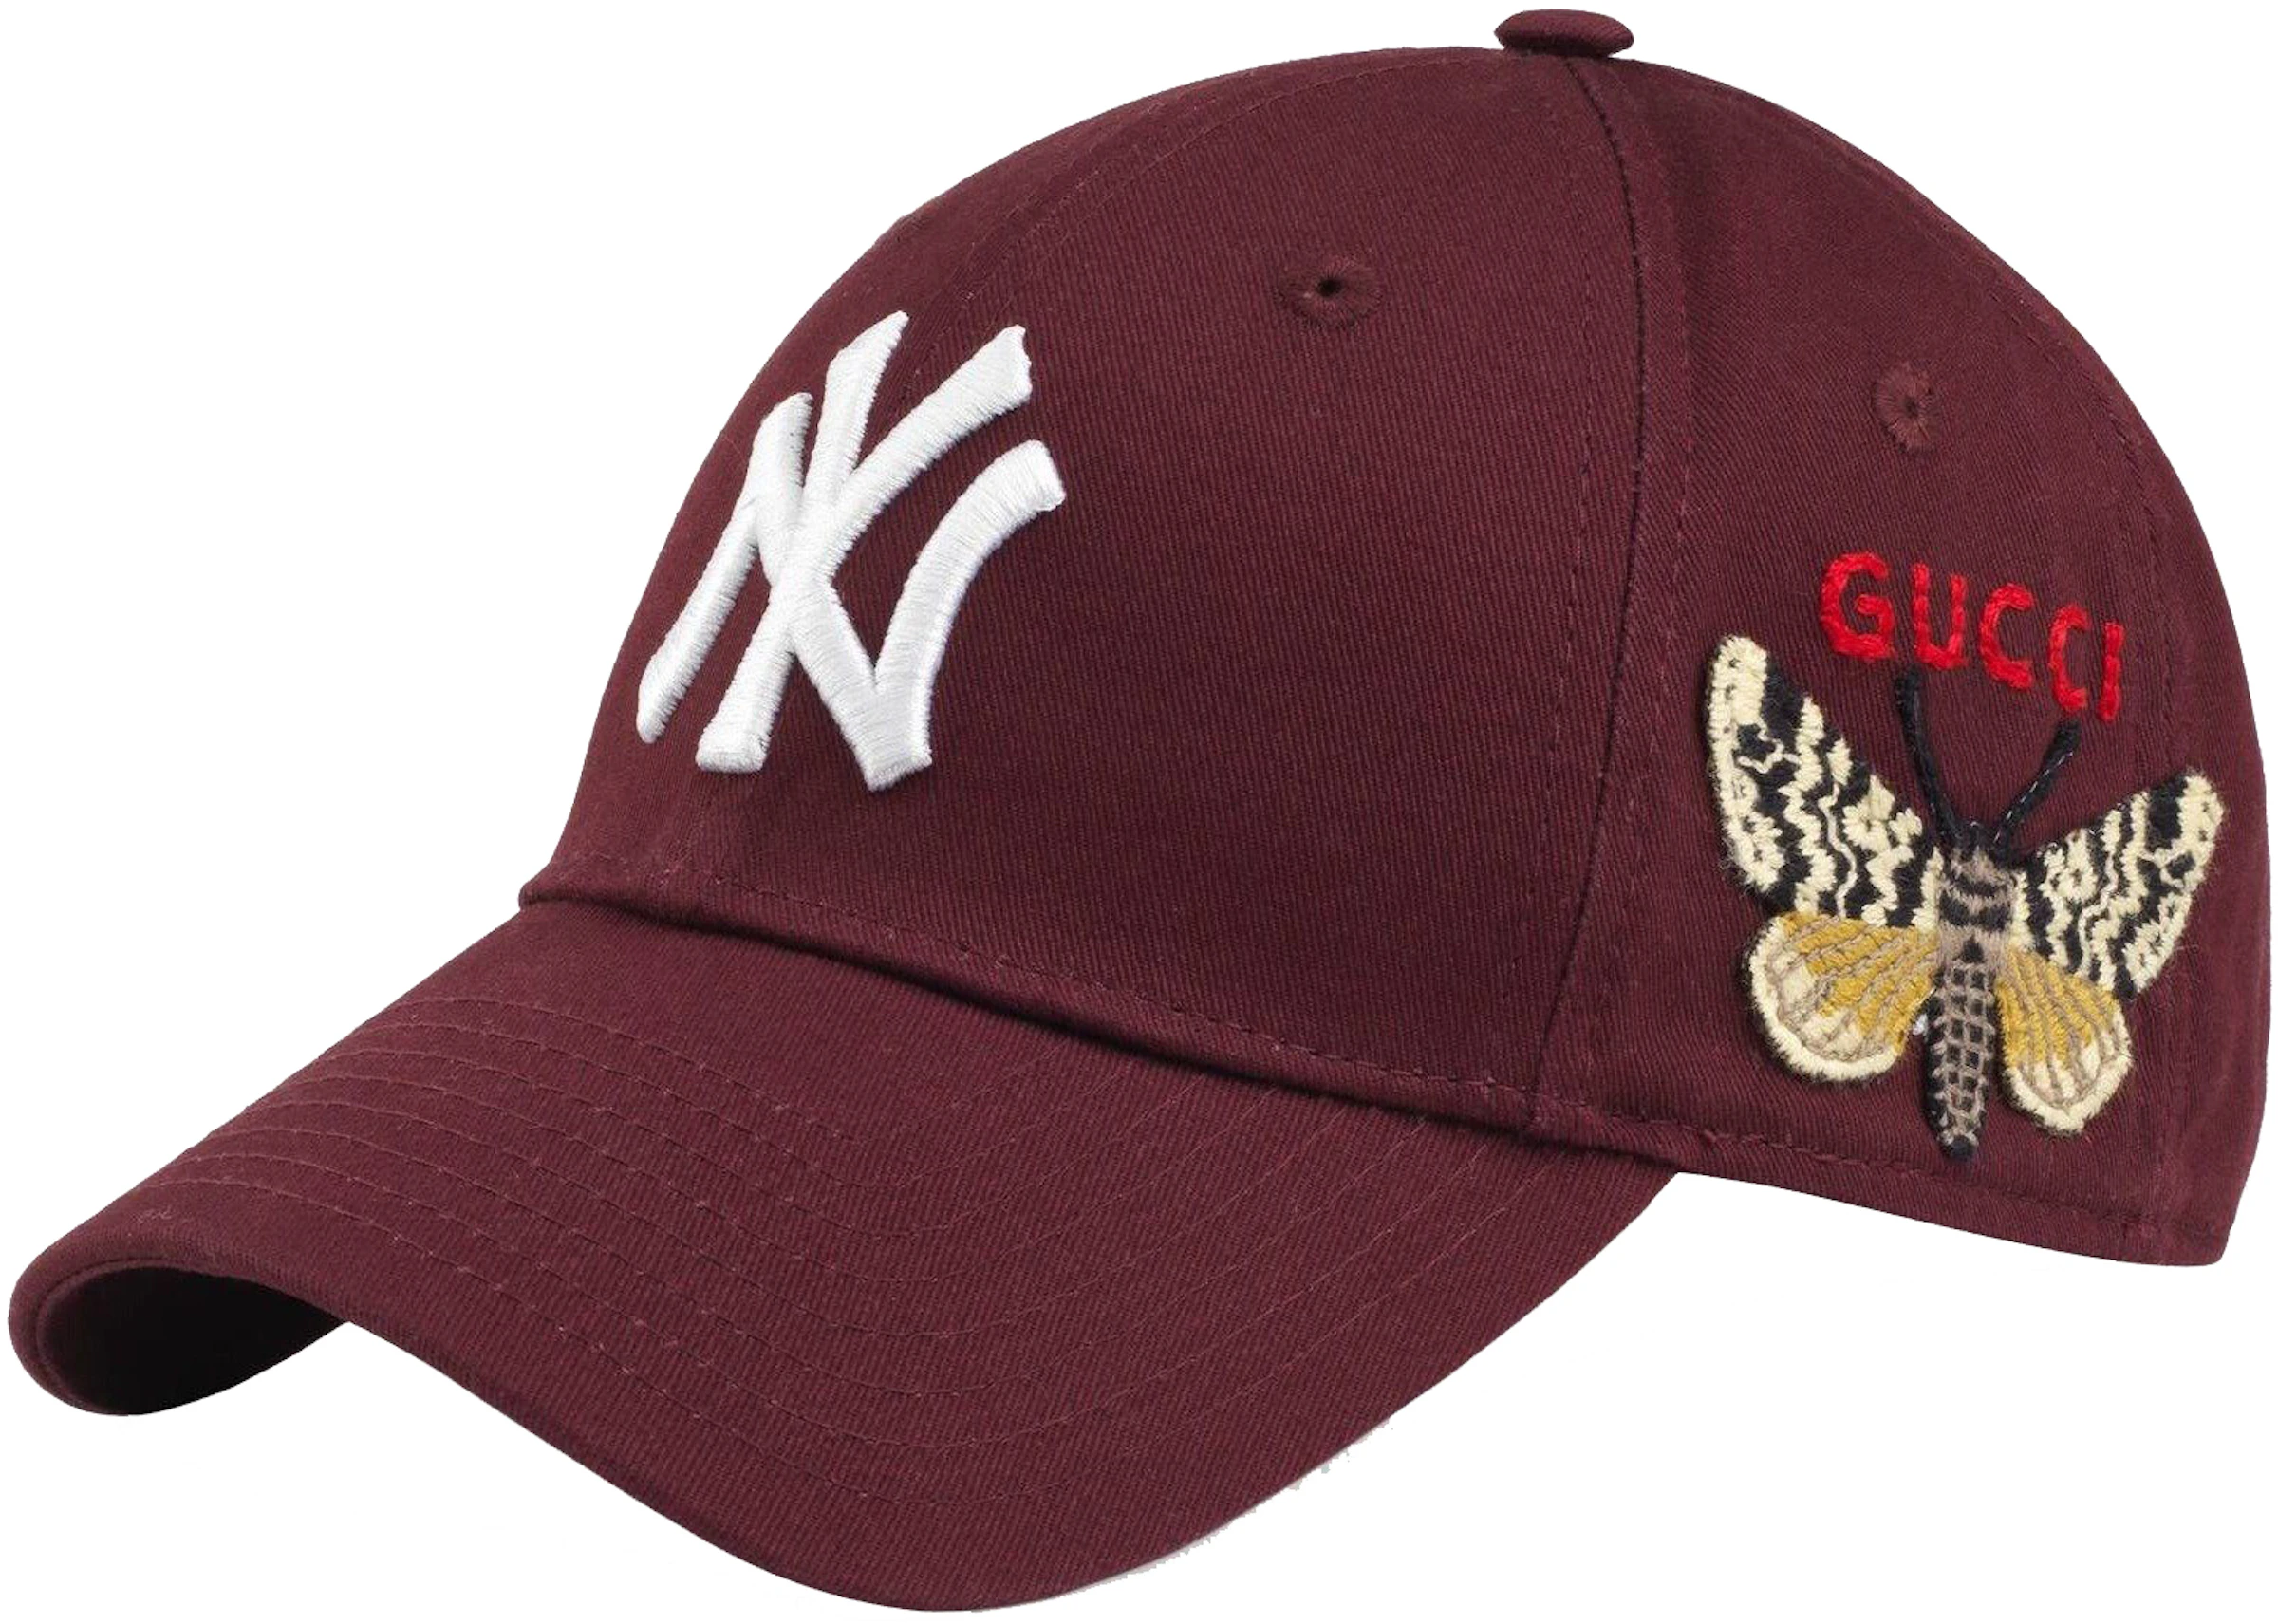 Verward jam Wolk Gucci NY Yankees Embroidered Butterfly Baseball Cap Burgundy - SS20 - US